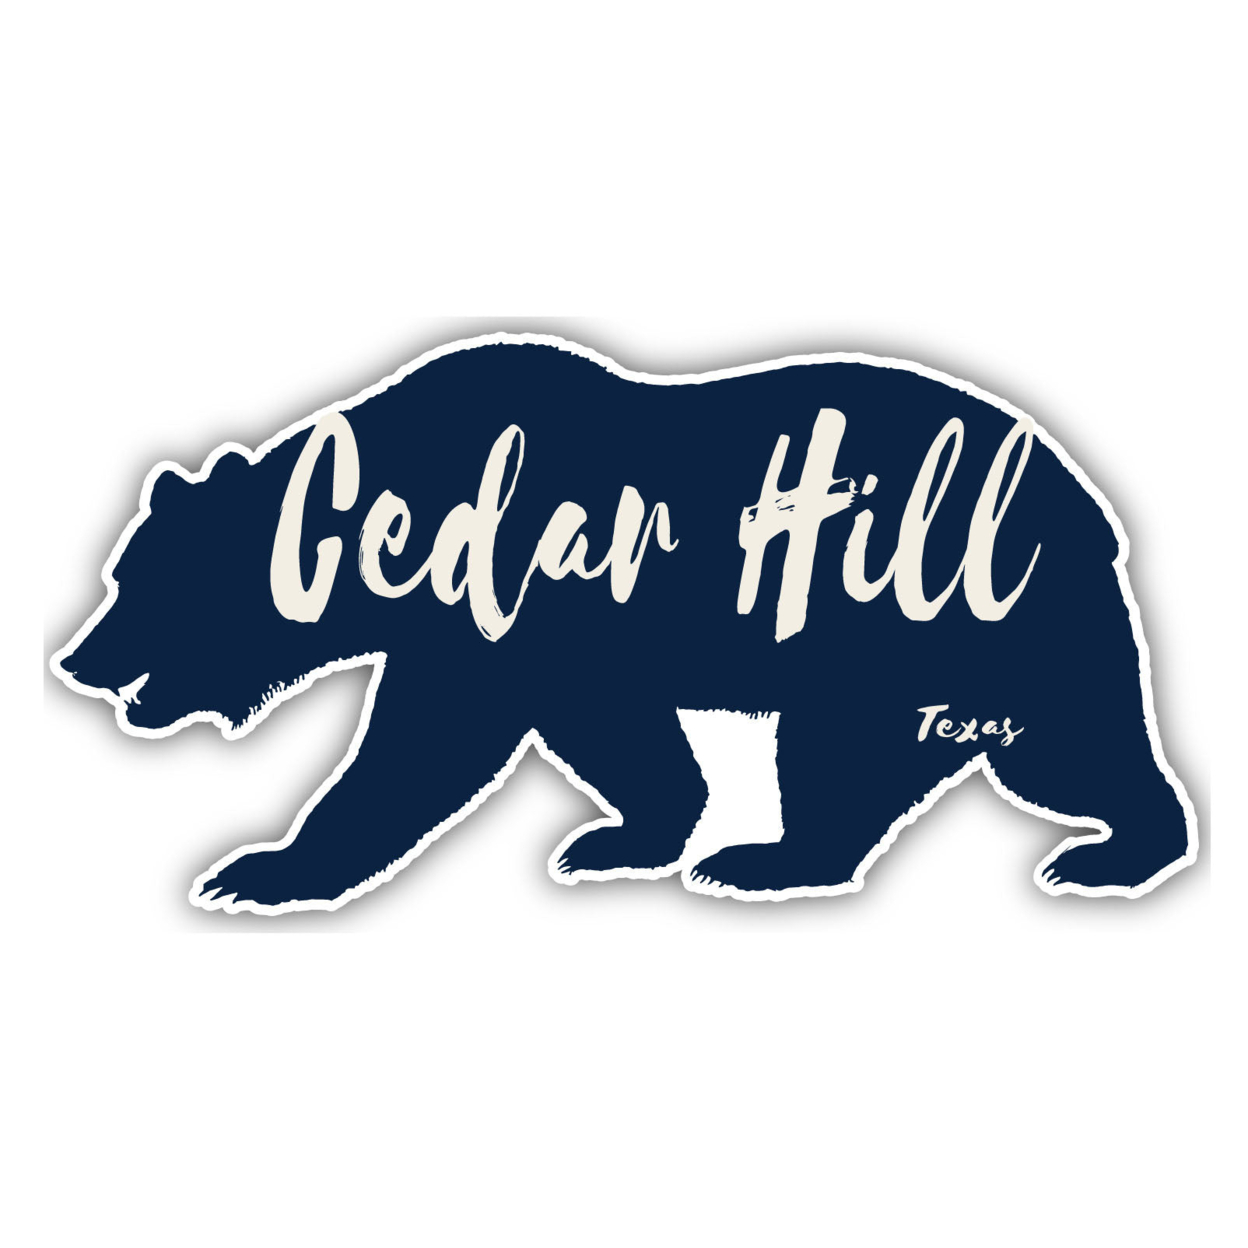 Cedar Hill Texas Souvenir Decorative Stickers (Choose Theme And Size) - Single Unit, 2-Inch, Bear